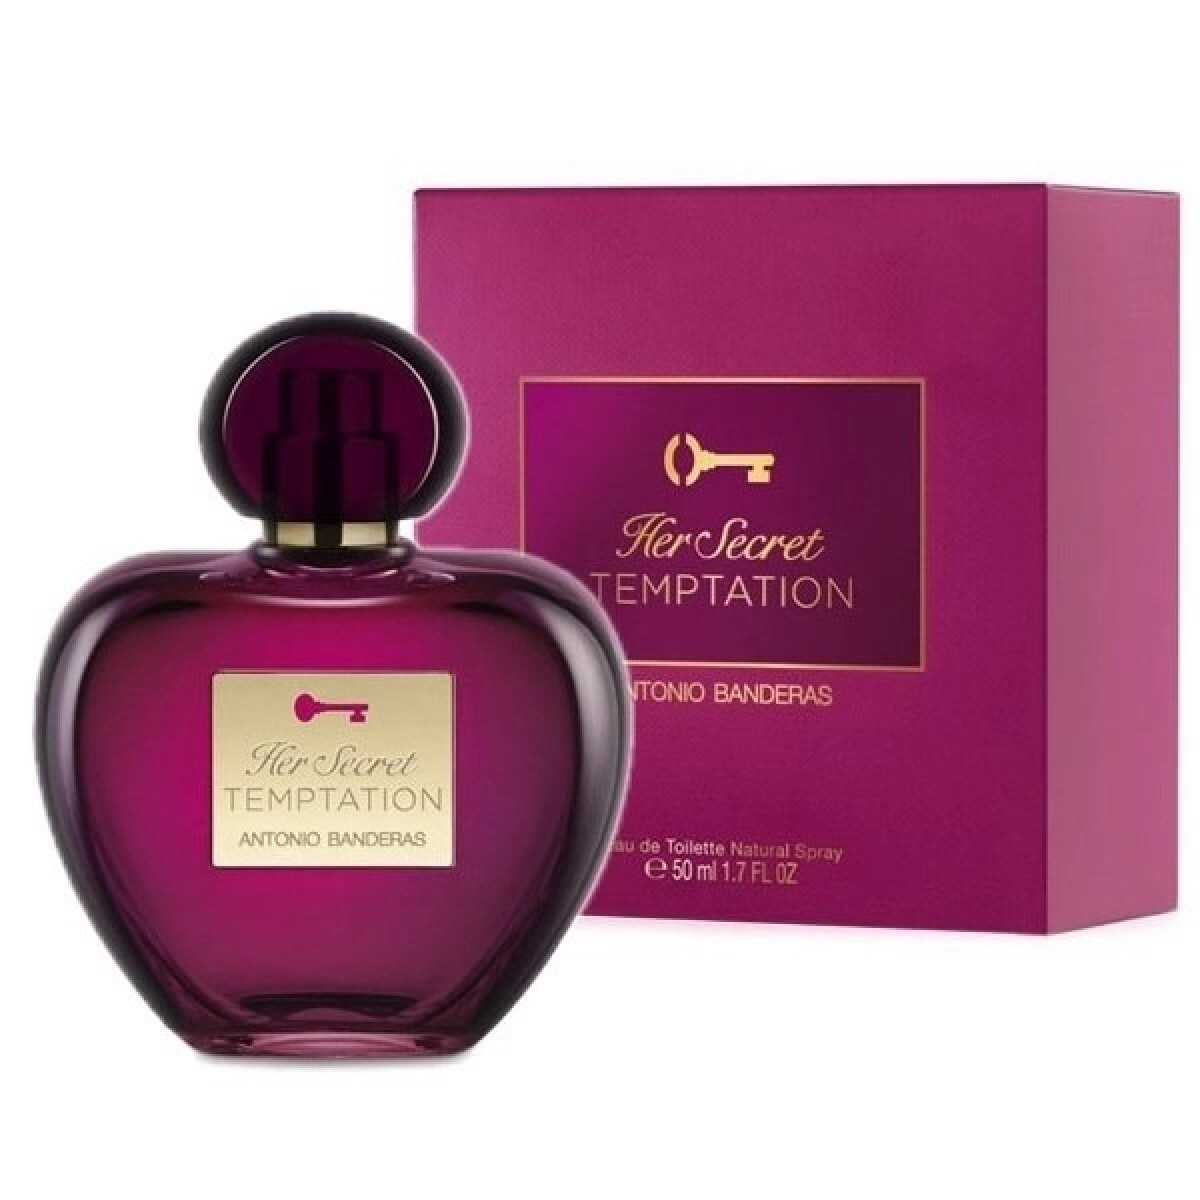 Perfume Her Secret Temptation Antonio Banderas Edt 50 Ml. 